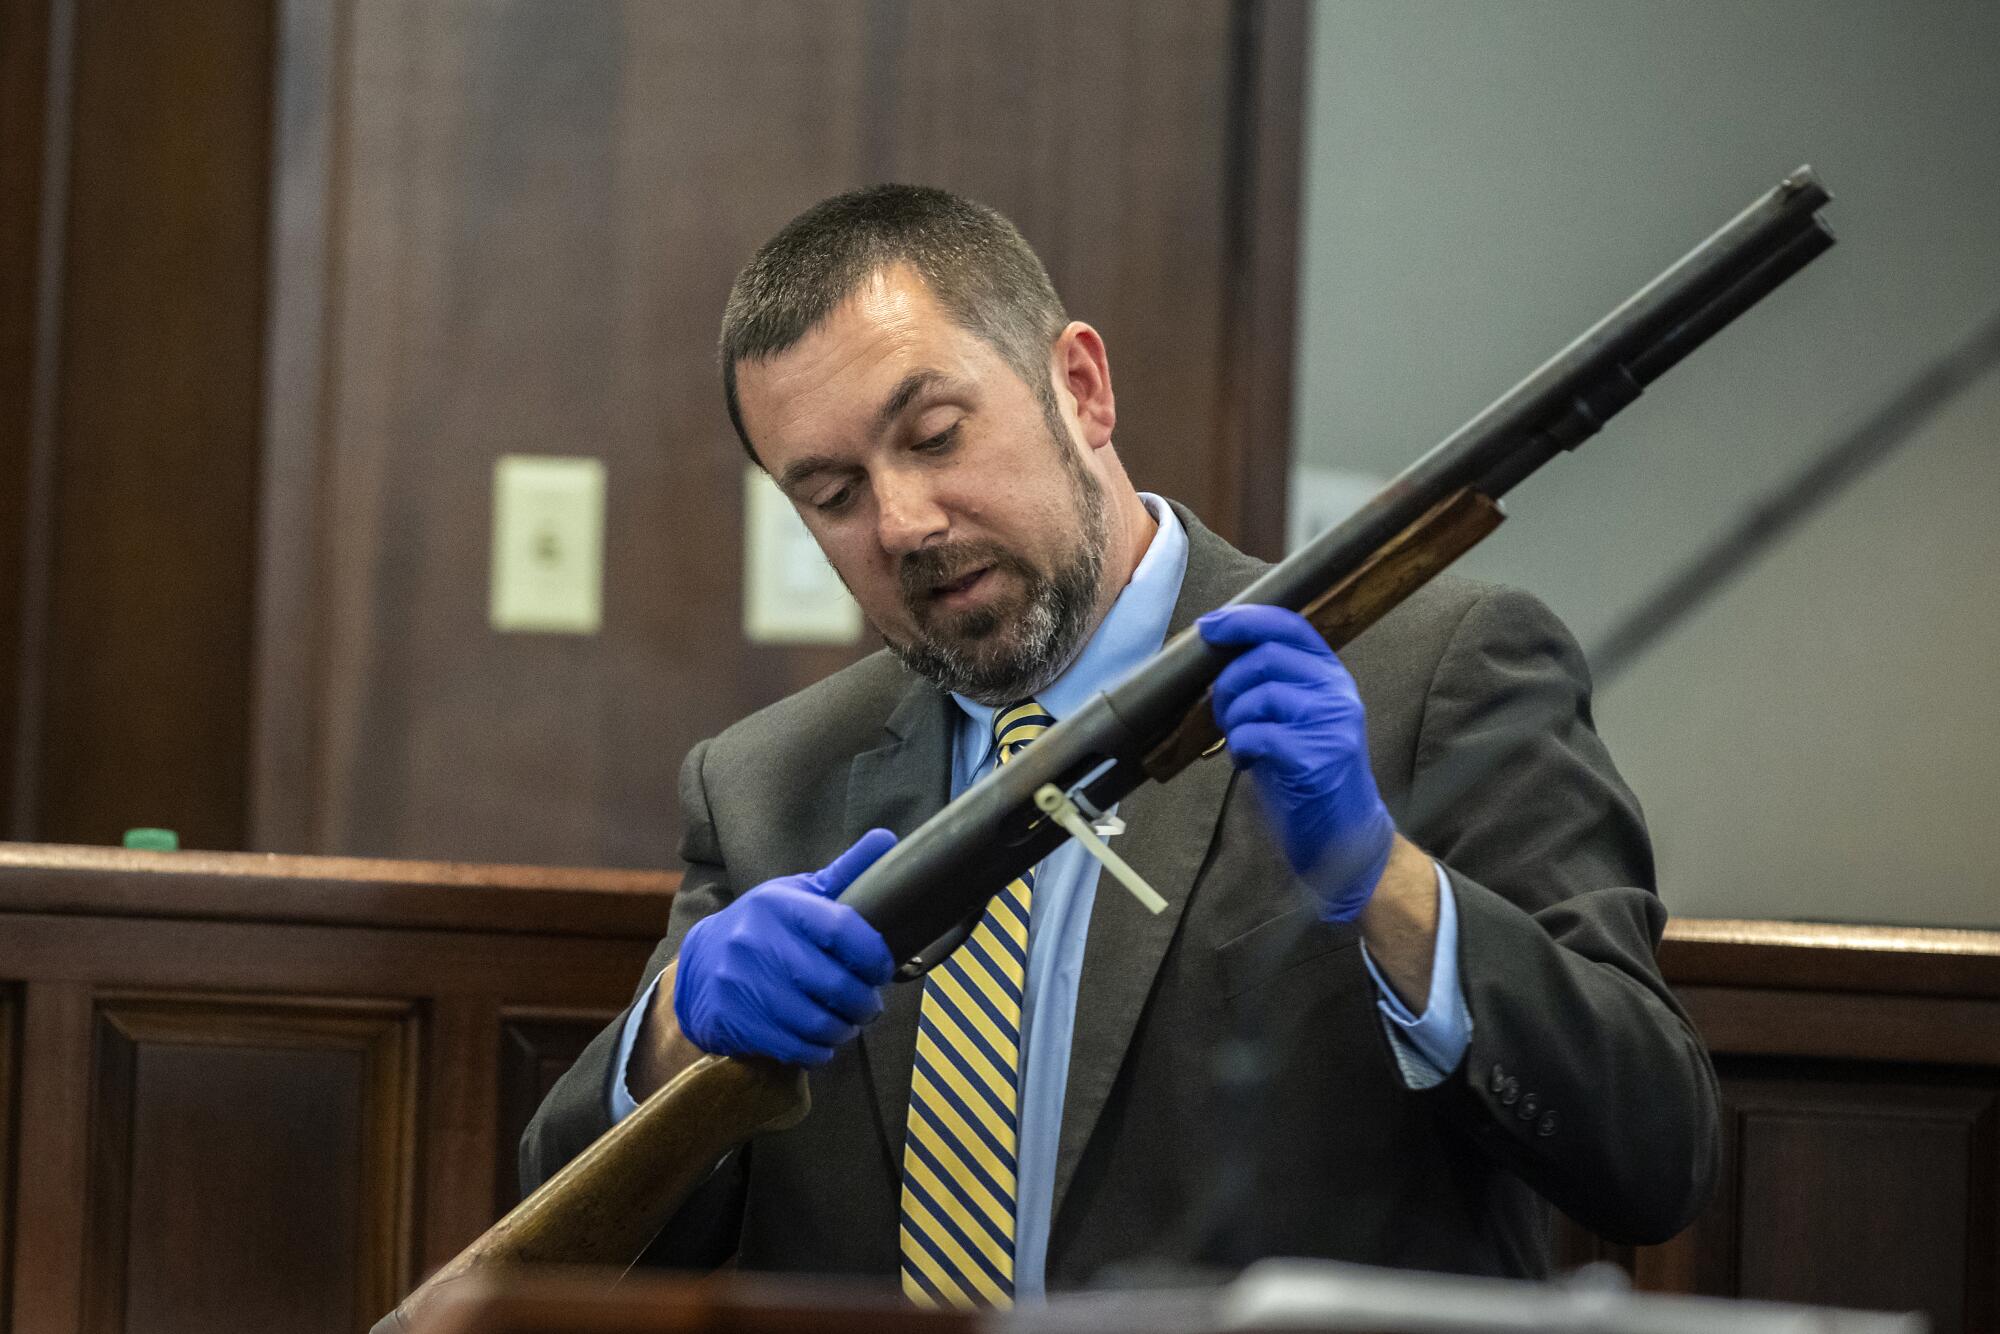 A man holds a shotgun in court.